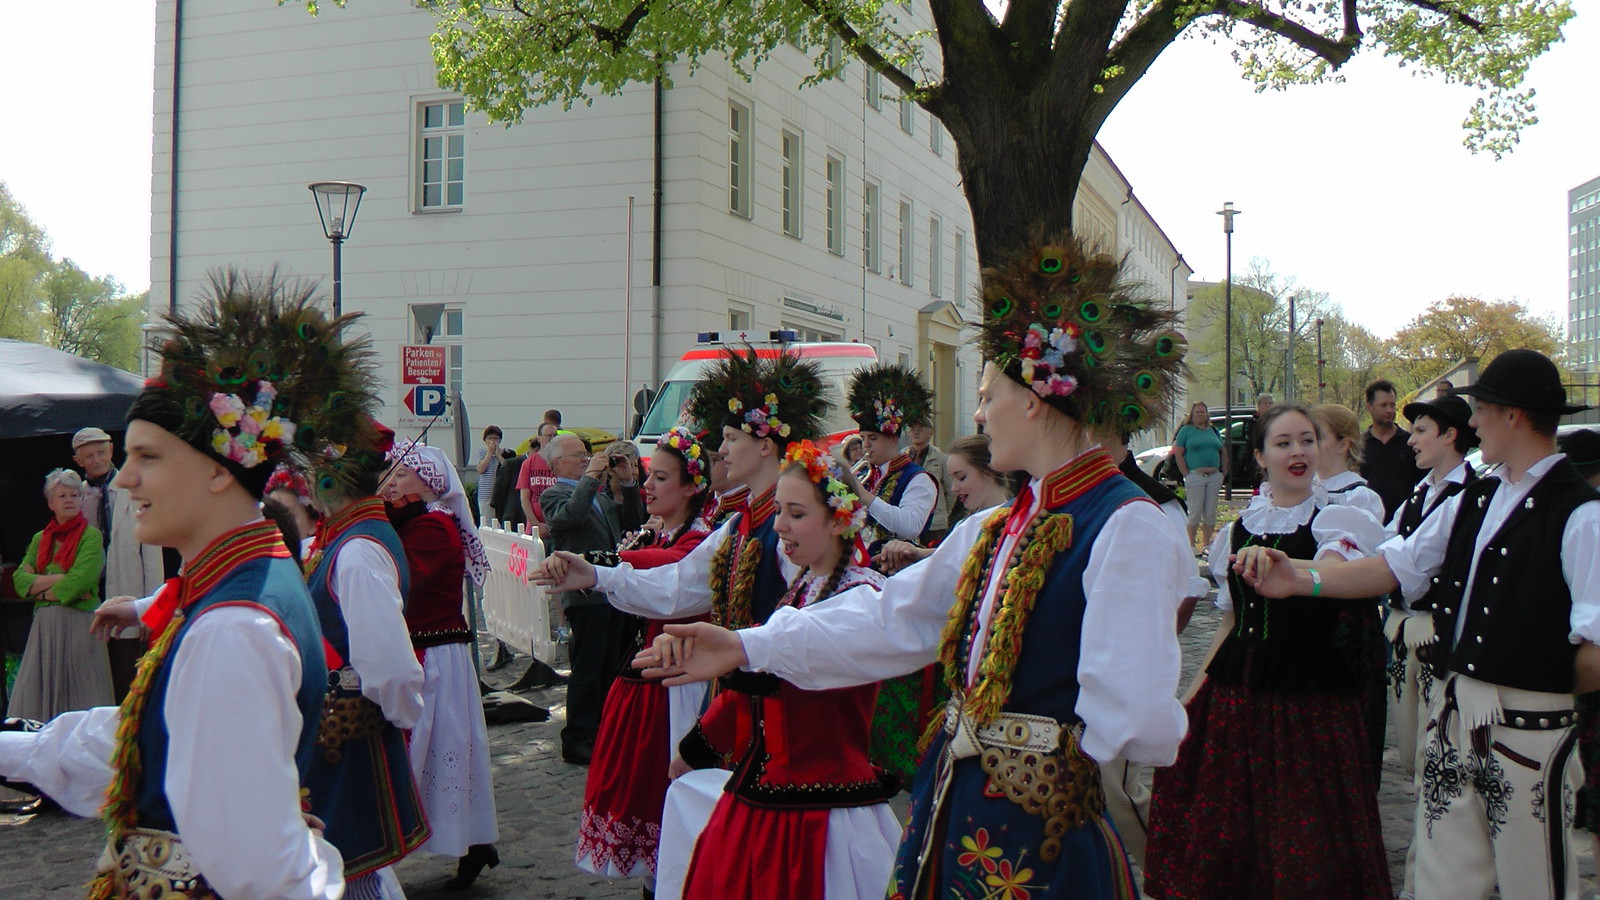 2015-04-26-Musikfest175Marsch_Holzmarkt